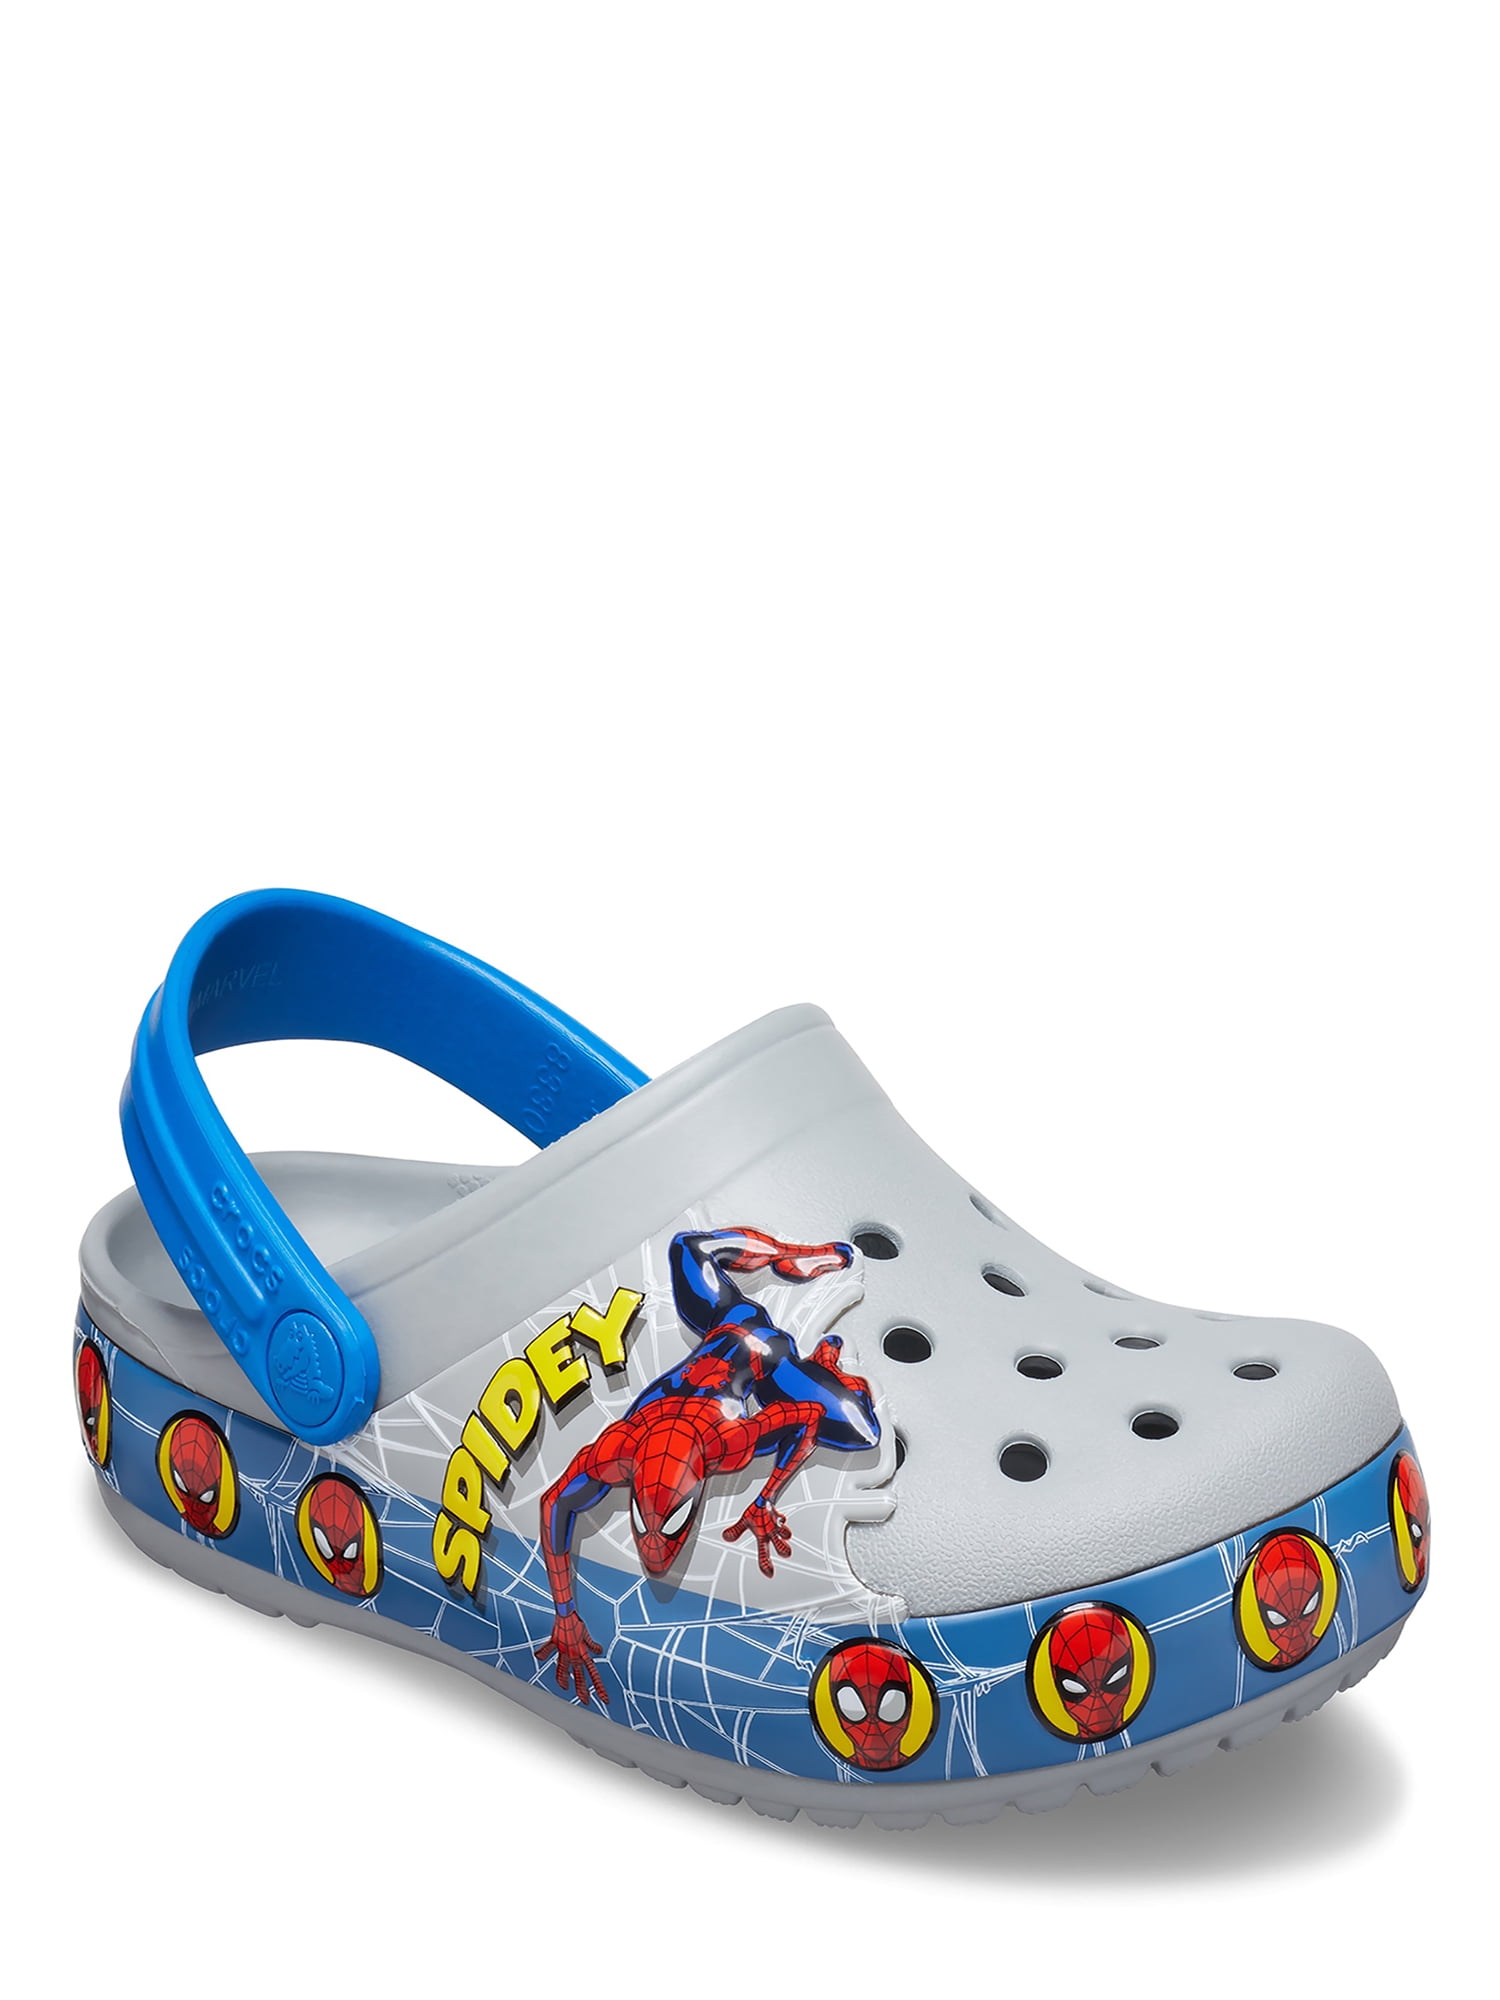 Kids Character Spiderman Beach Clogs Mules Crocs Flip Flops NEW 